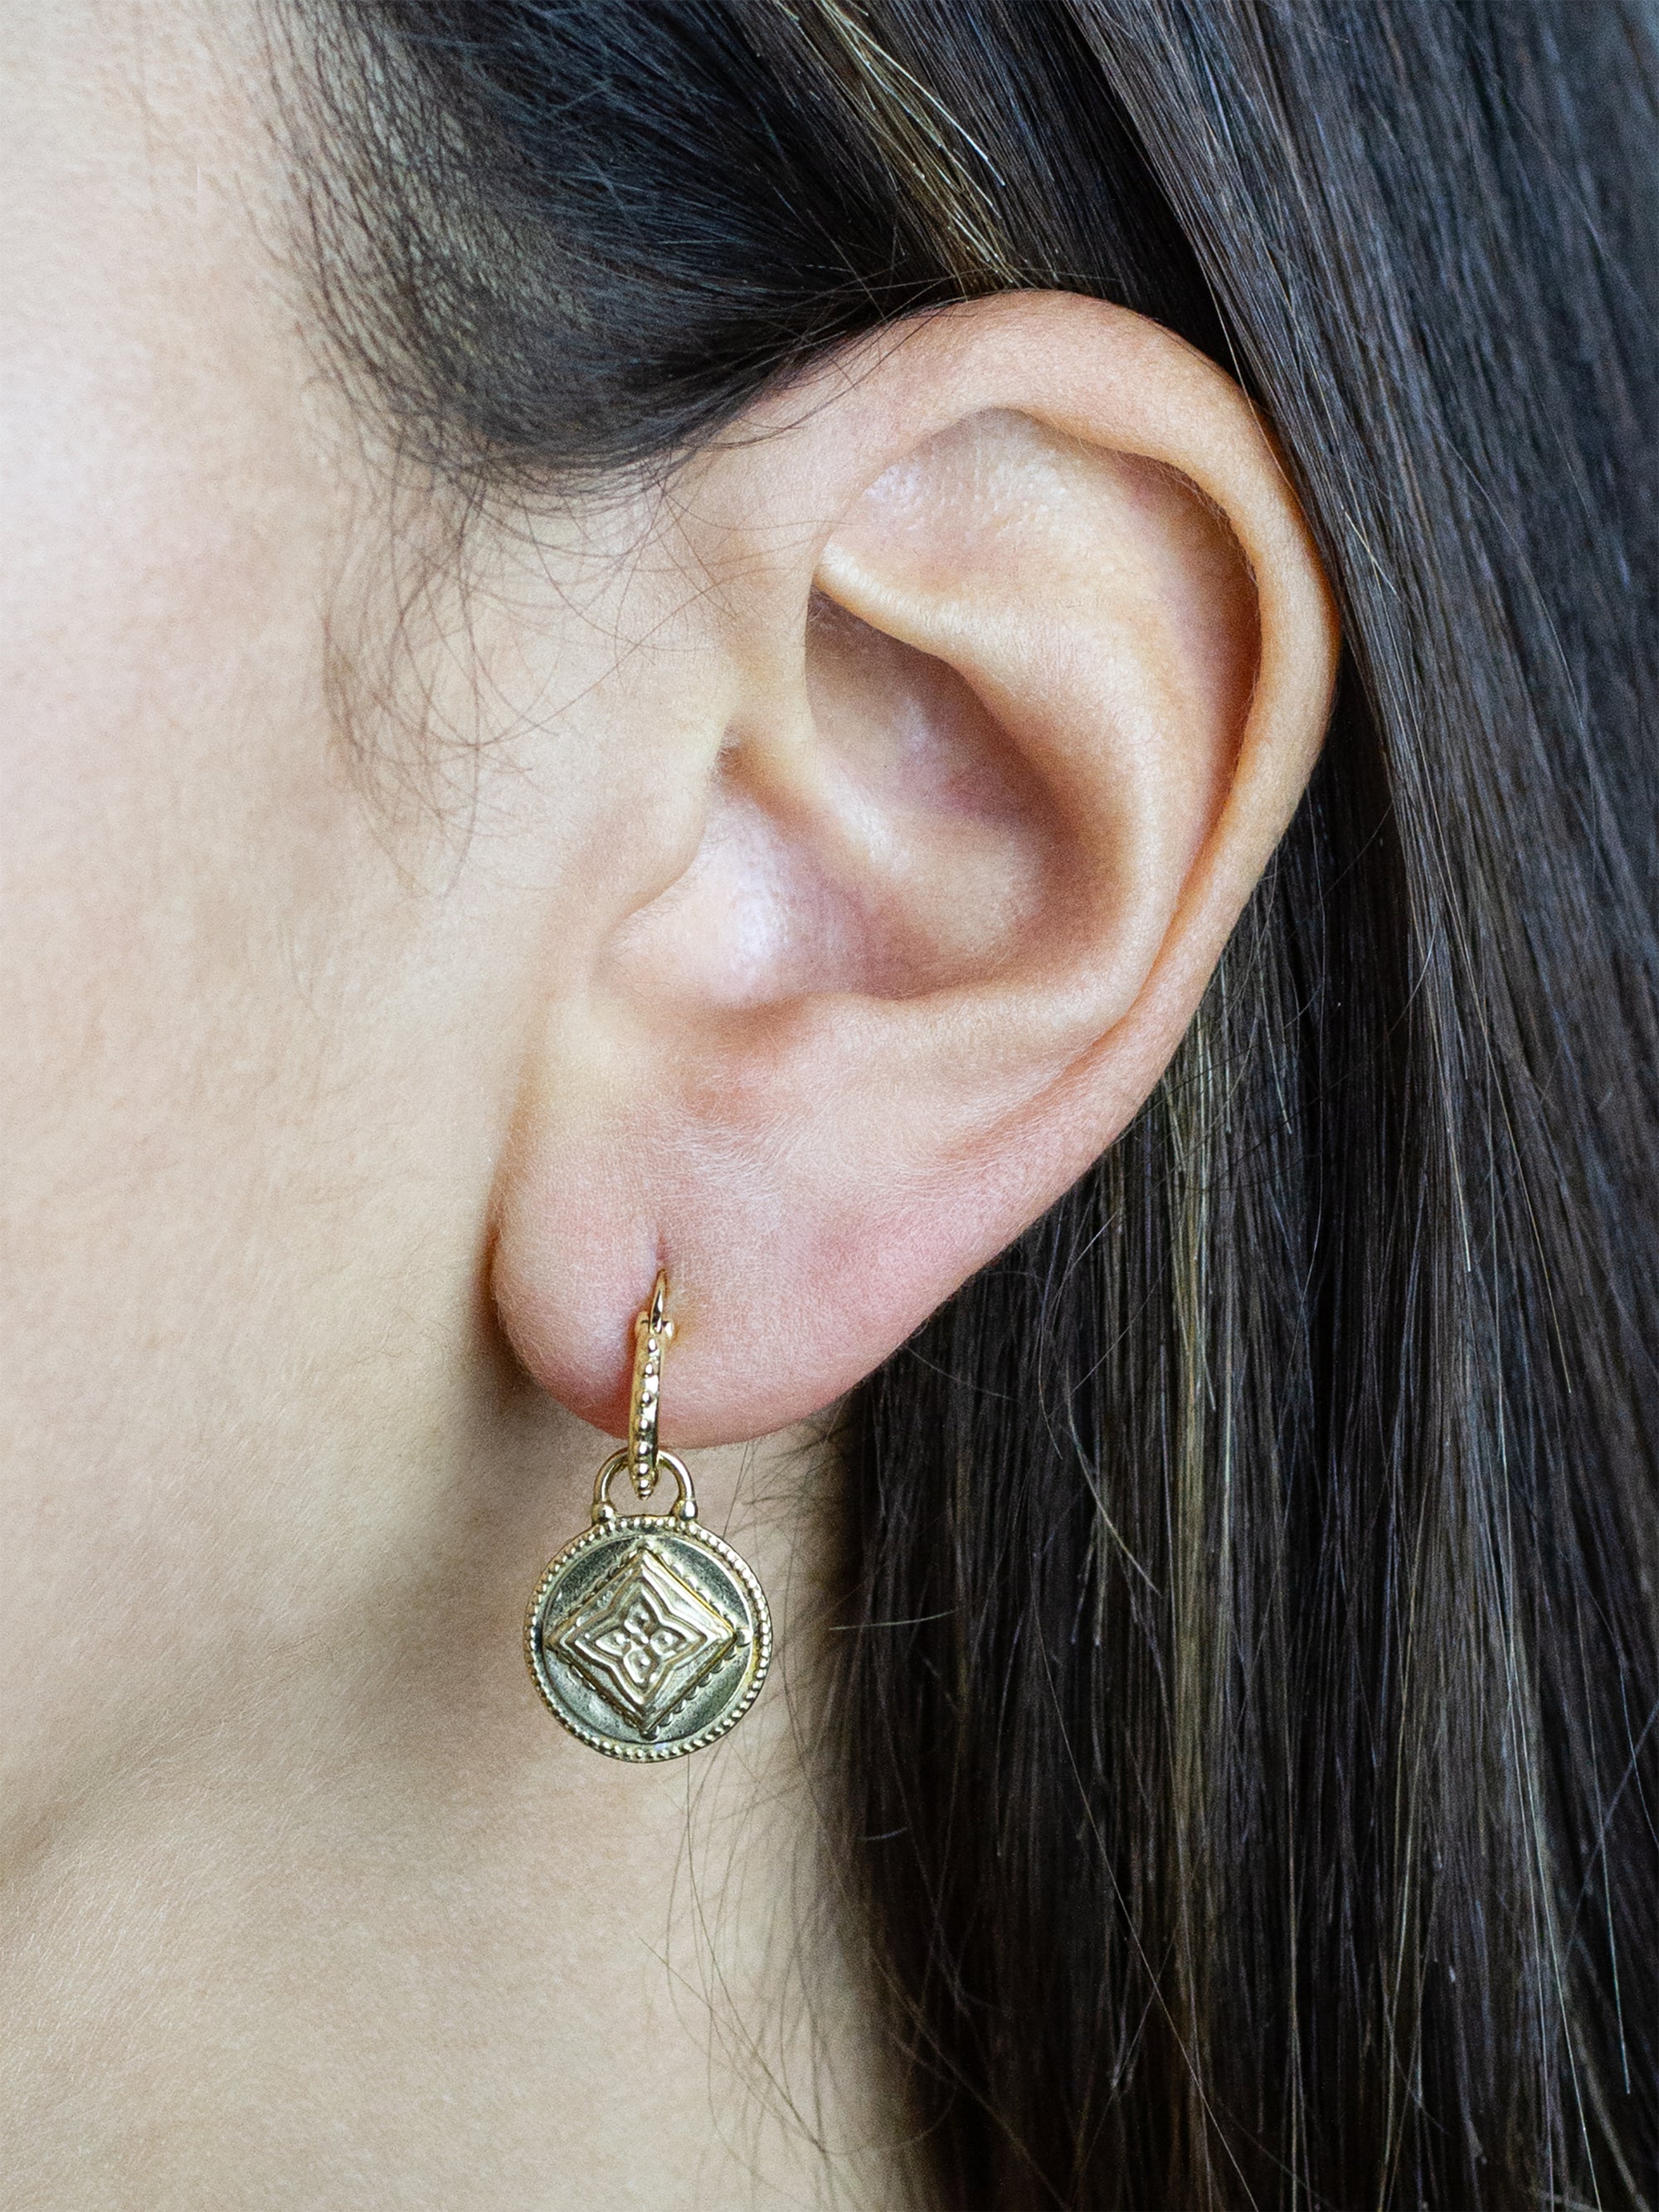 Siddha Earrings "raise your frequency"